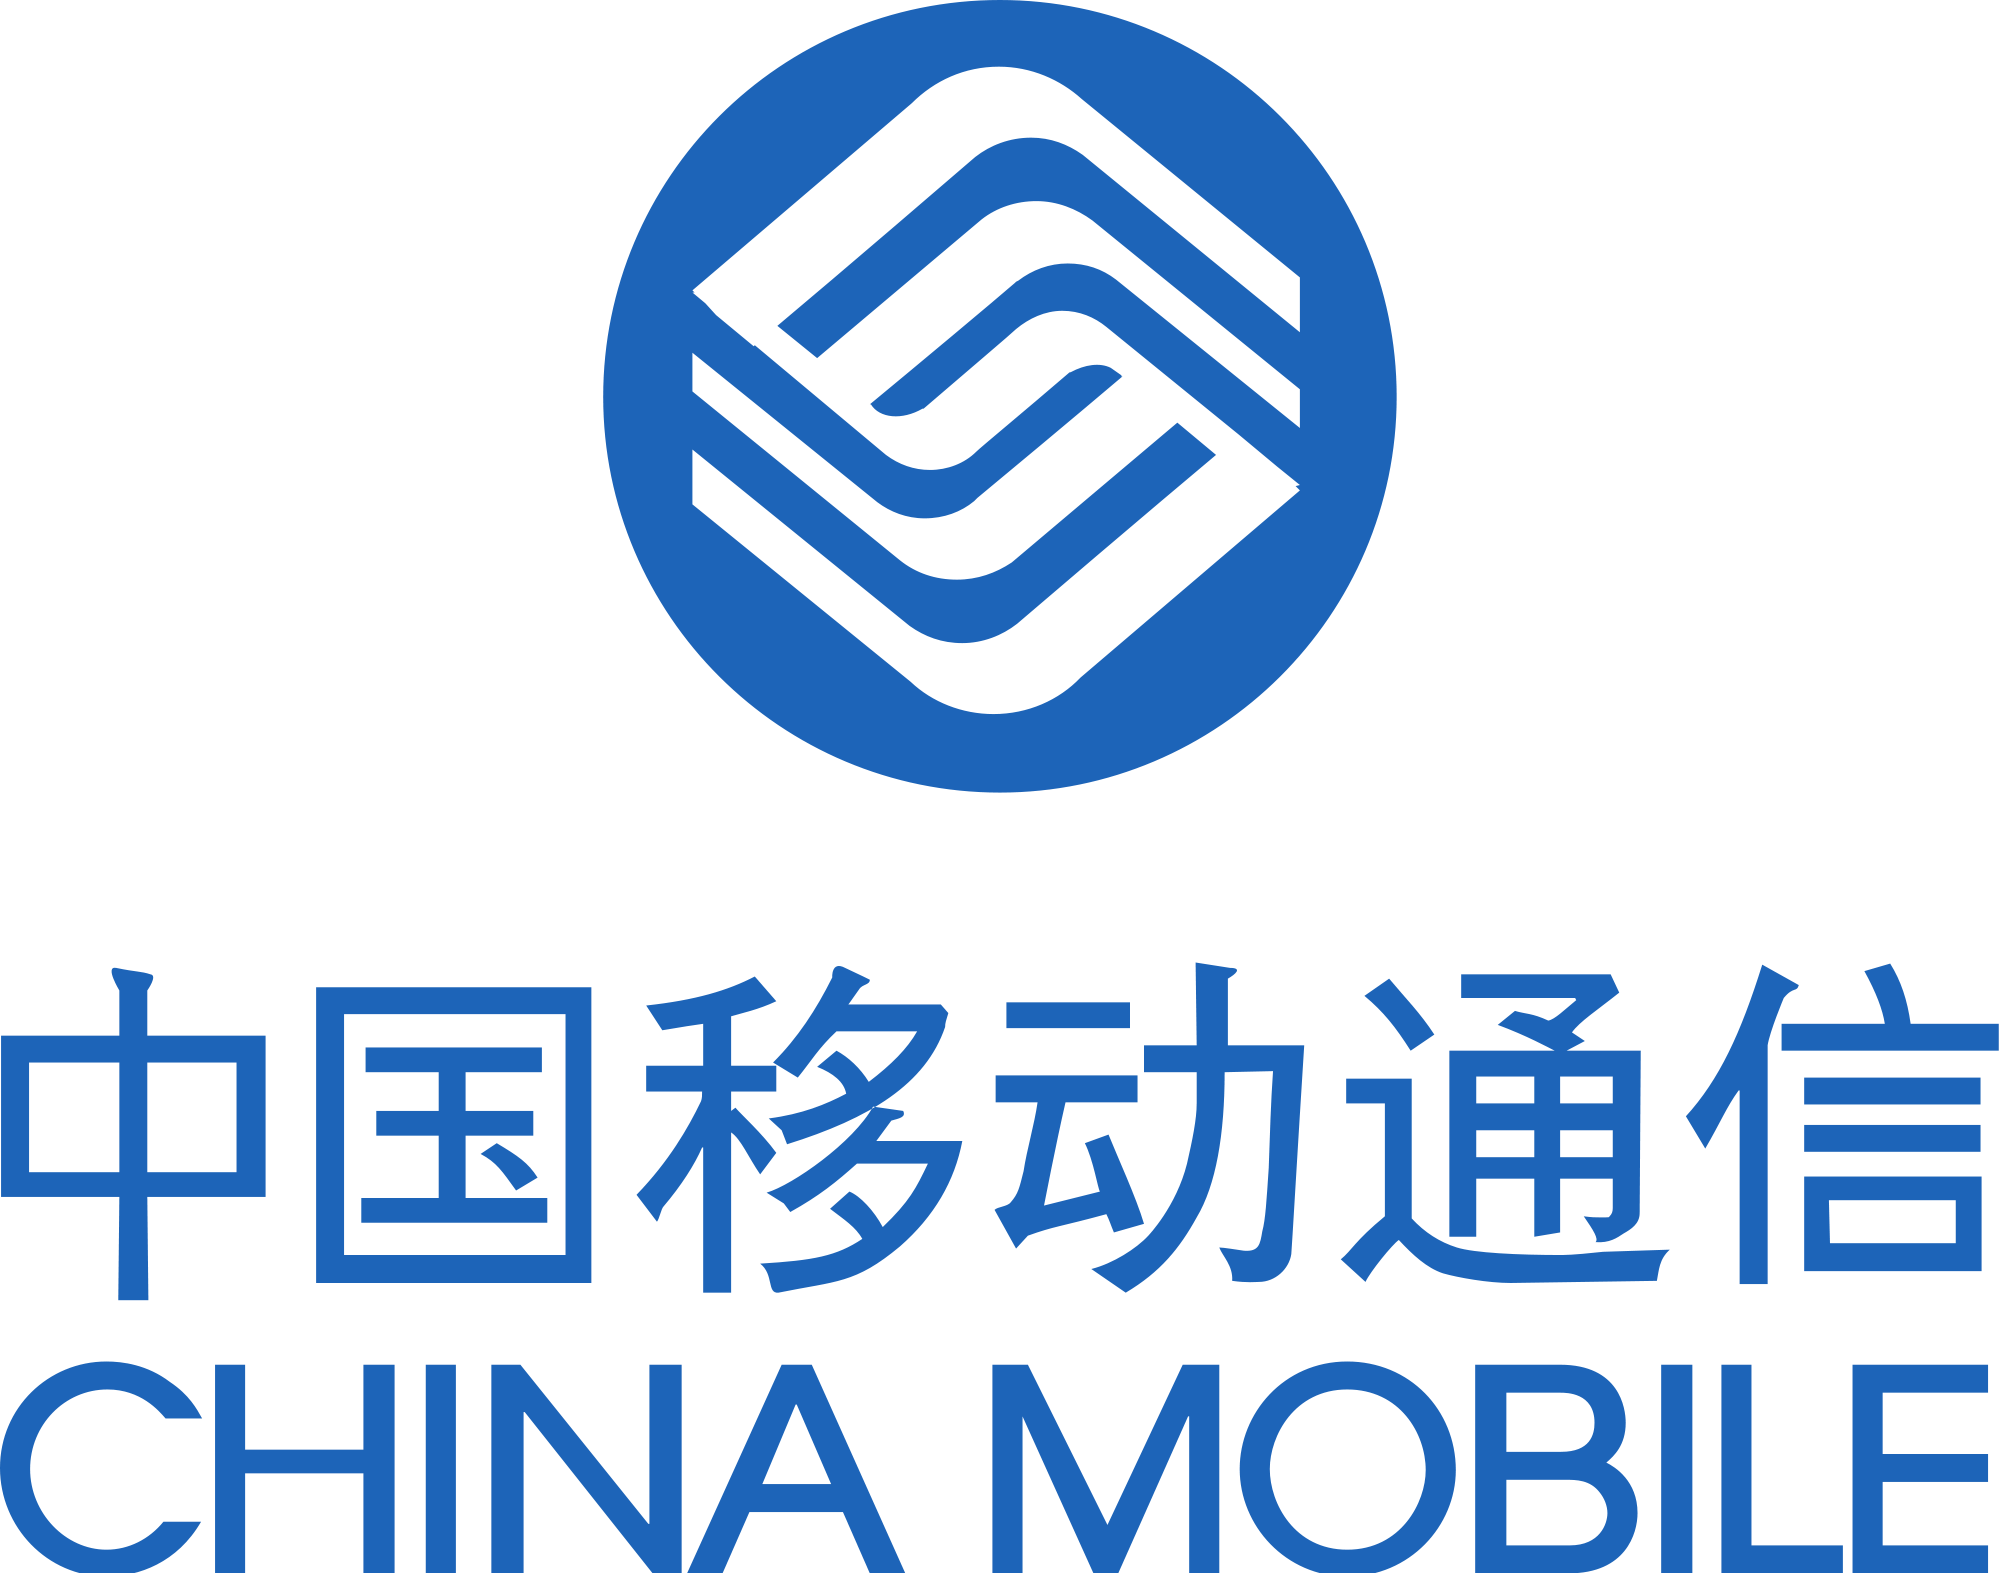 China Mobile Logo PNG Transparent China Mobile Logo.PNG Images. | PlusPNG